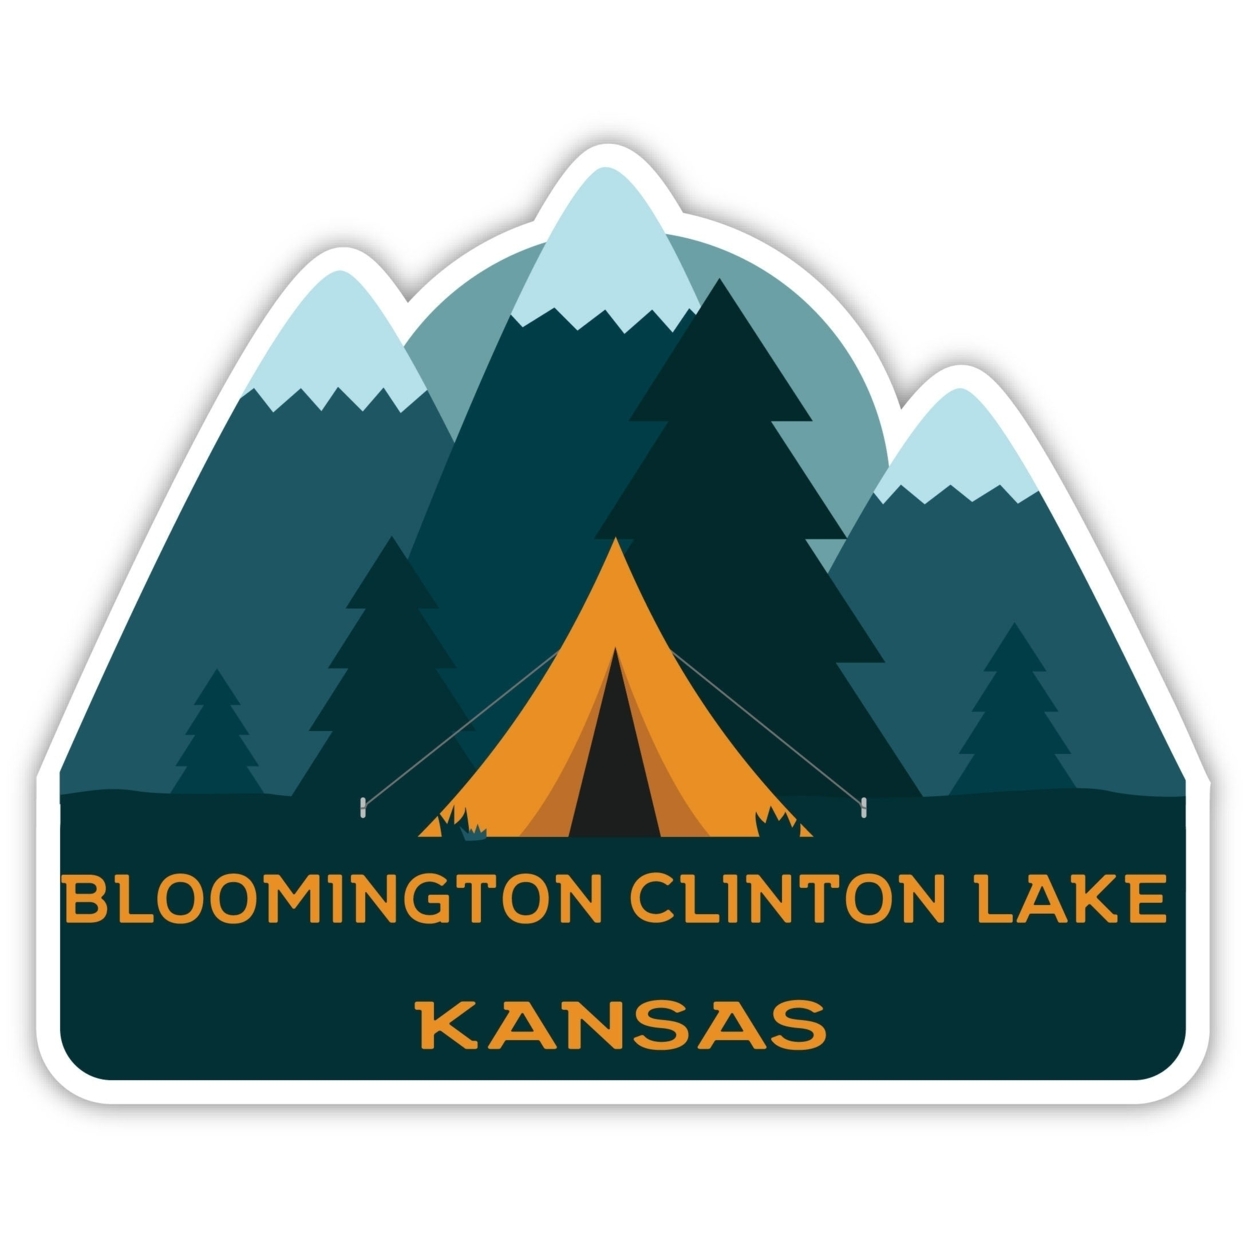 Bloomington Clinton Lake Kansas Souvenir Decorative Stickers (Choose Theme And Size) - 4-Pack, 12-Inch, Tent